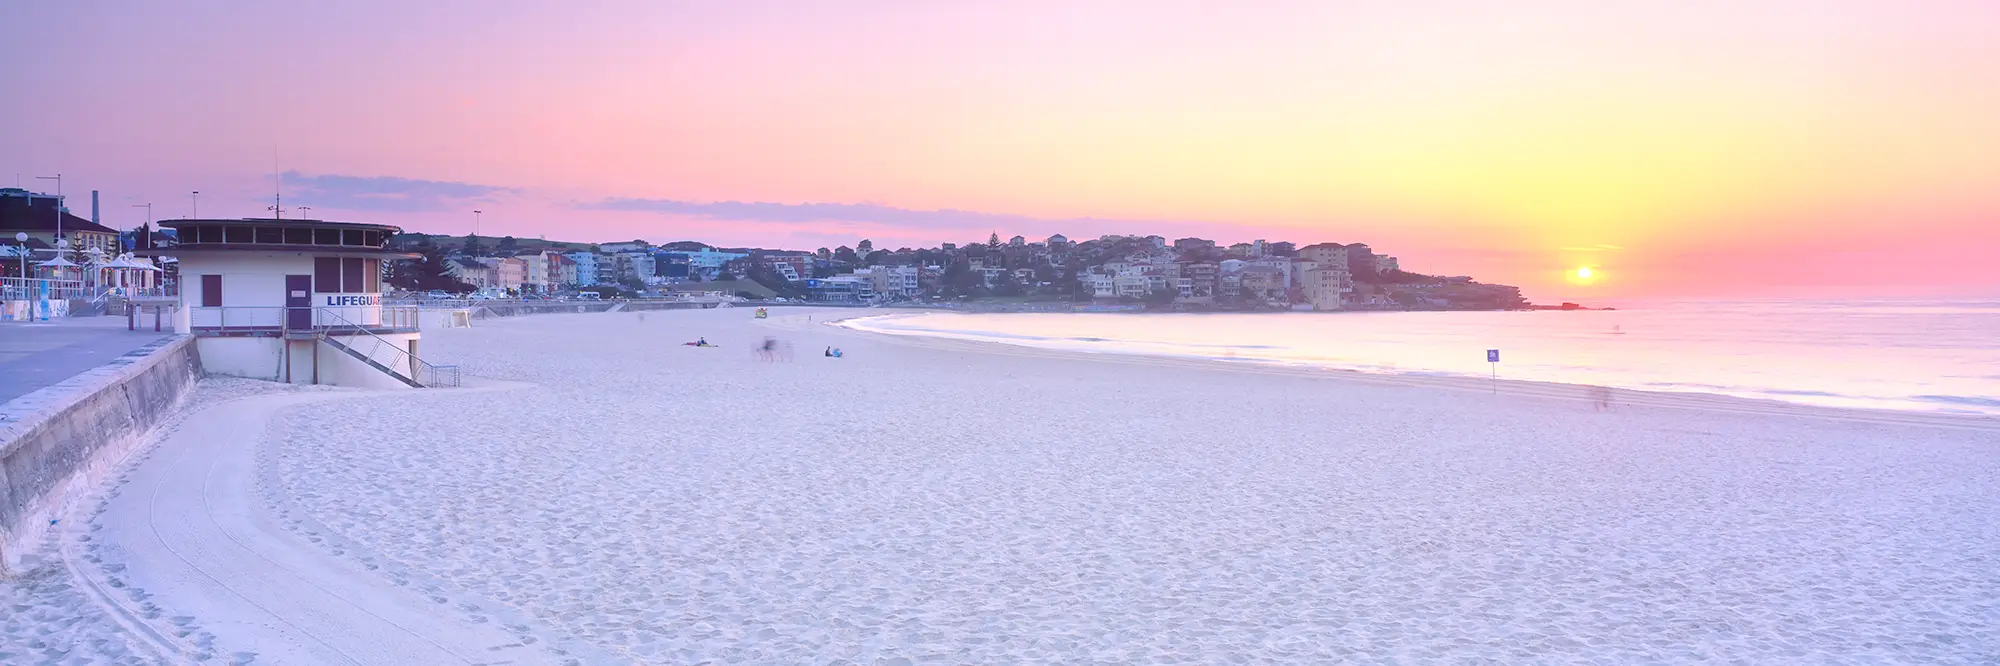 Bondi Beach Panoramic Sunrise Stretched Canvas Prints